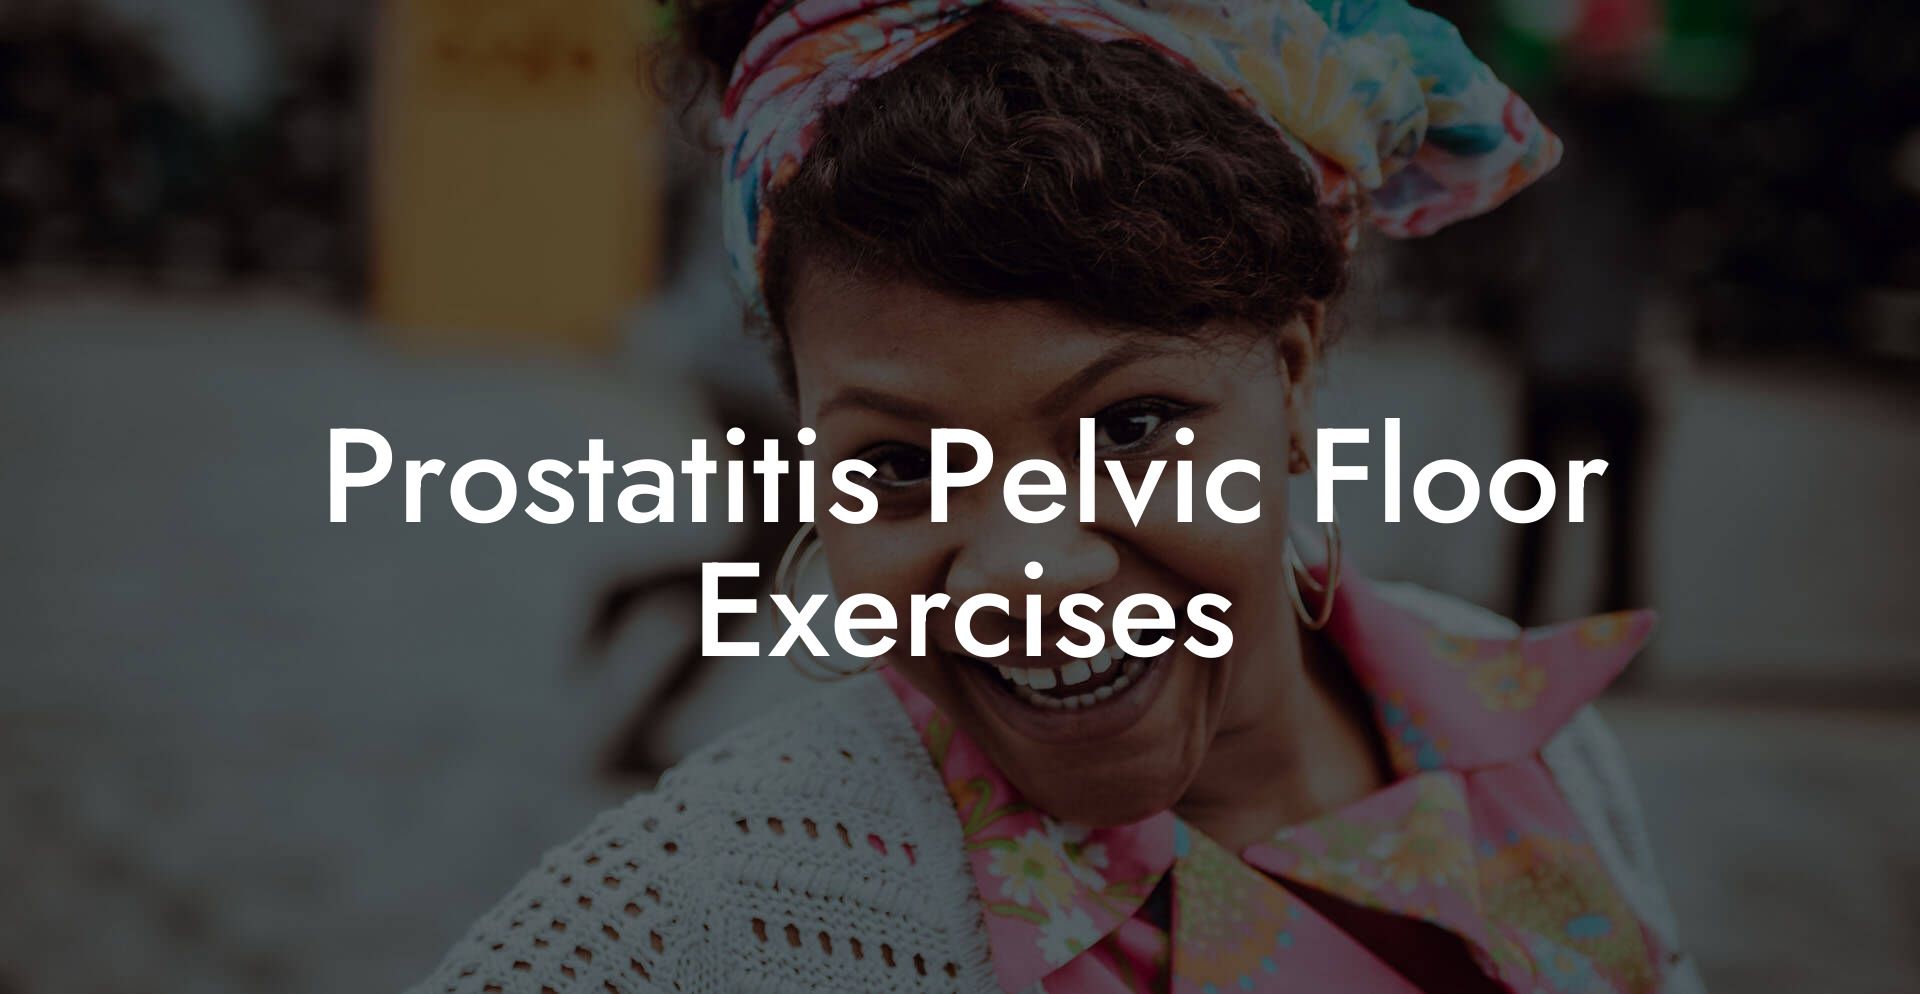 Prostatitis Pelvic Floor Exercises